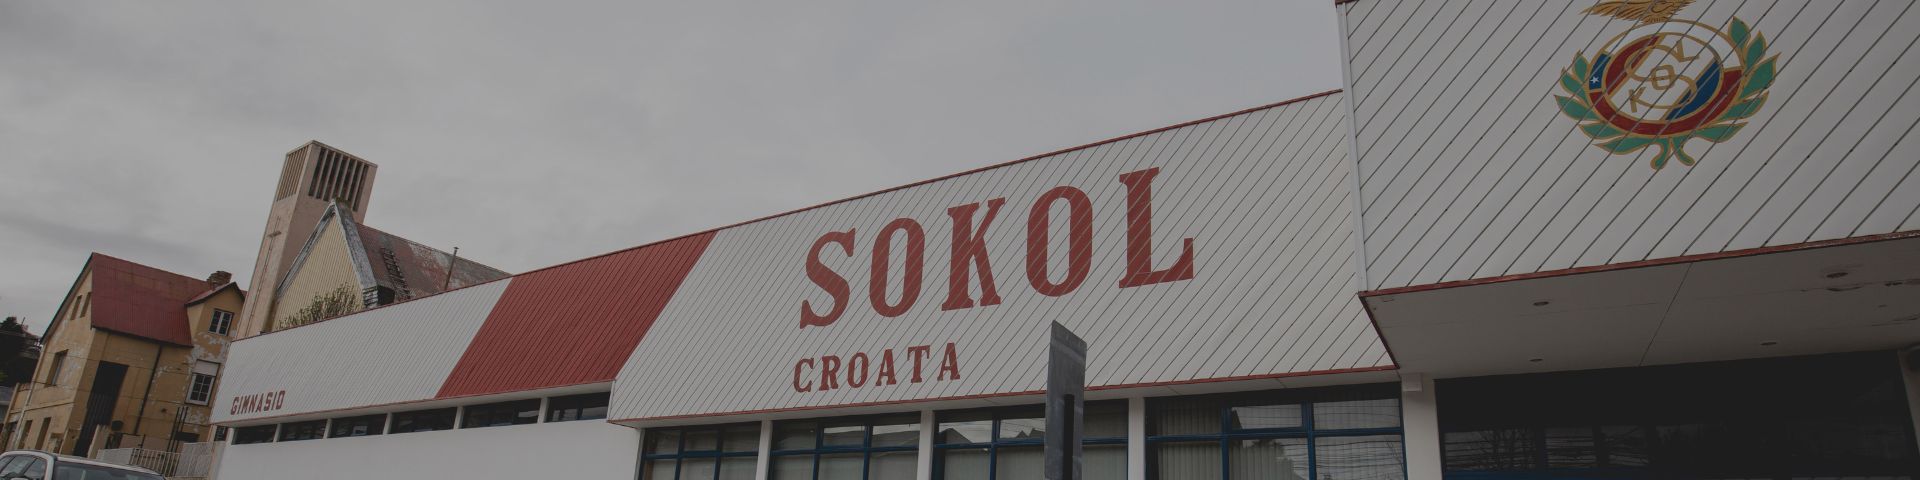 Club Sokol